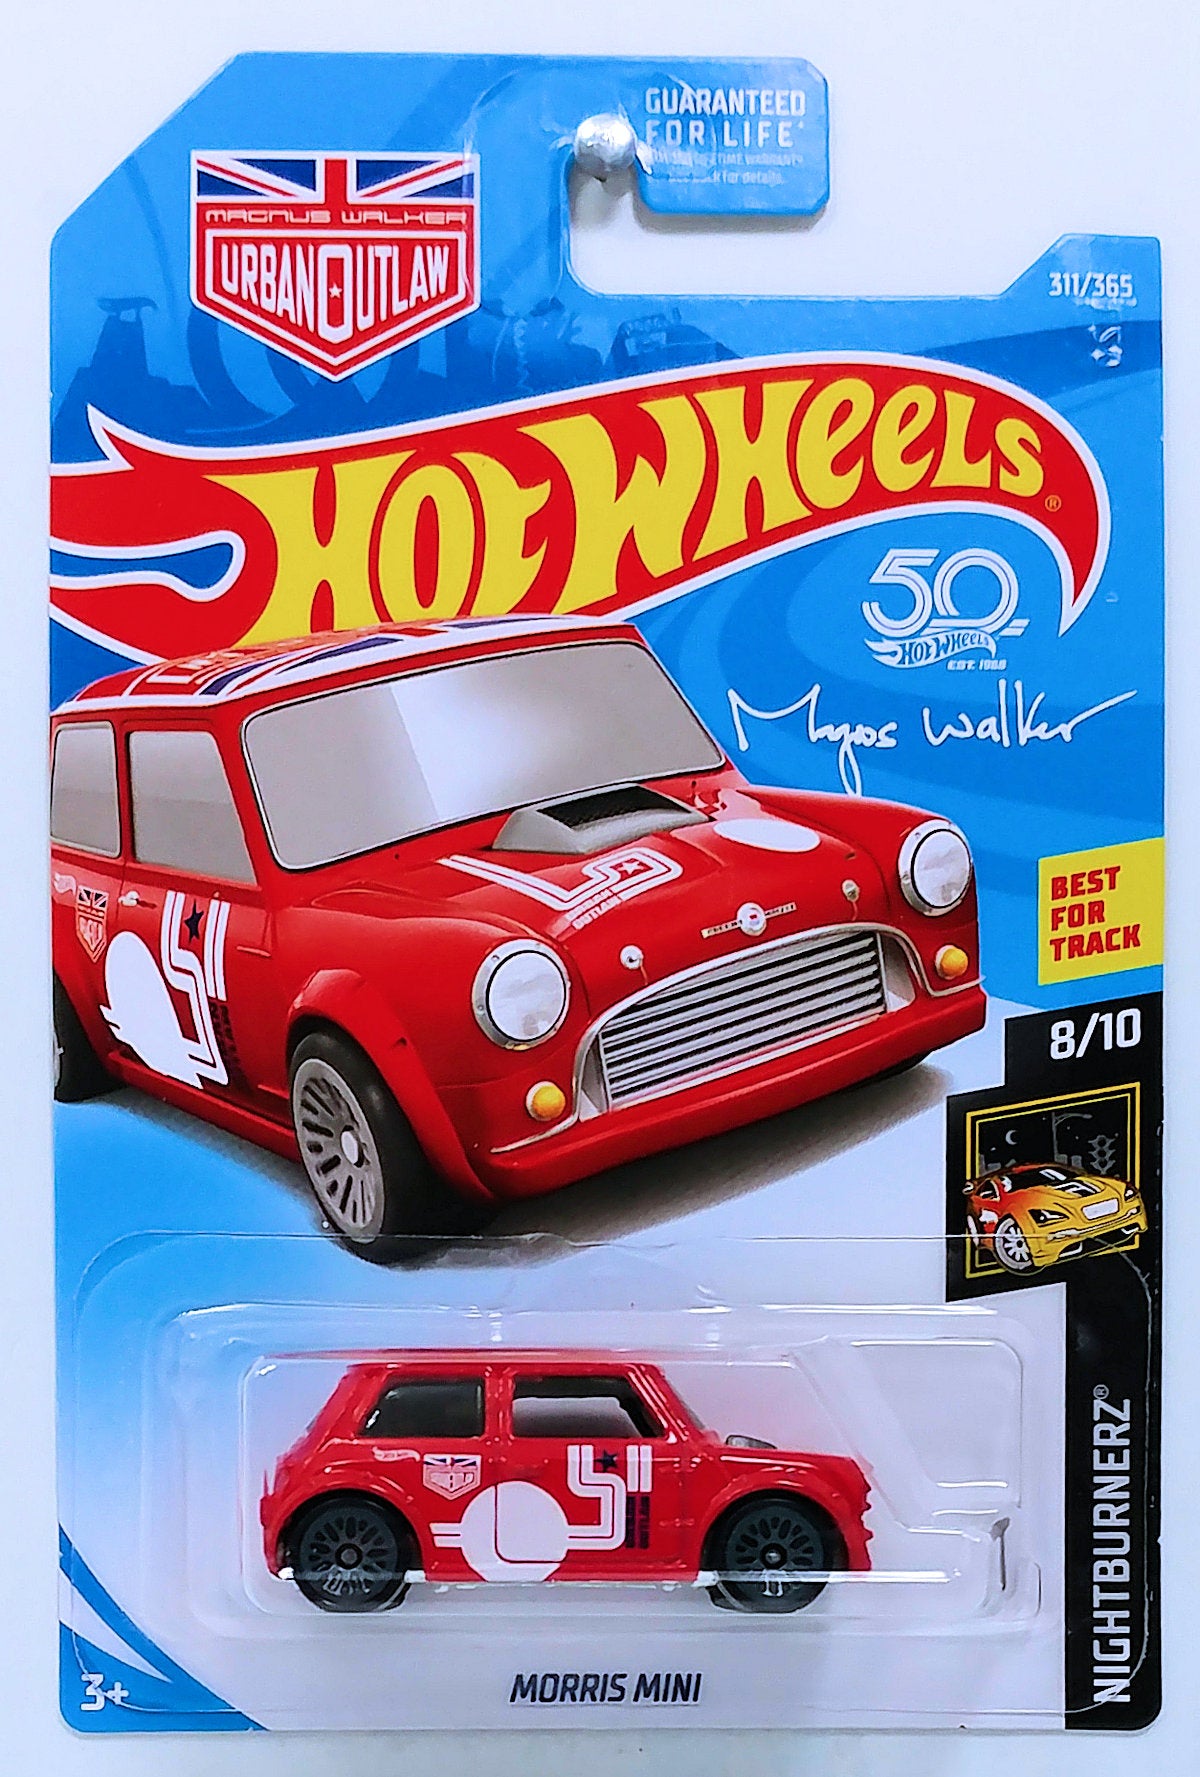 Hot Wheels 2018 - Collector # 311/365 - Nightburnerz 8/10 - Morris Mini - Red